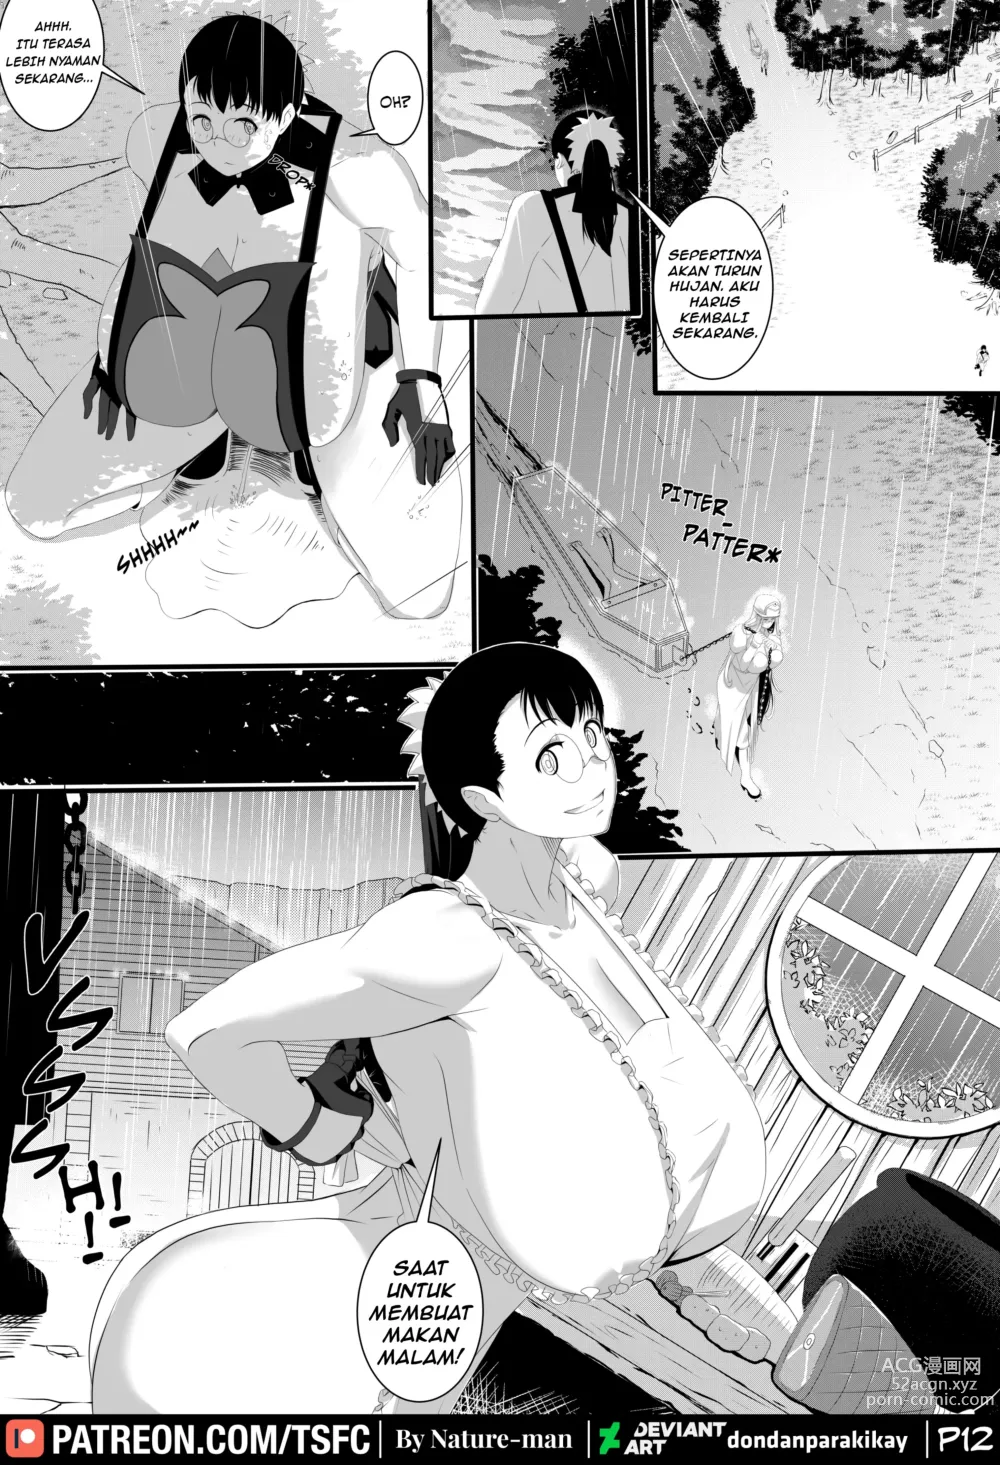 Page 12 of manga Cattleya, My Saviour